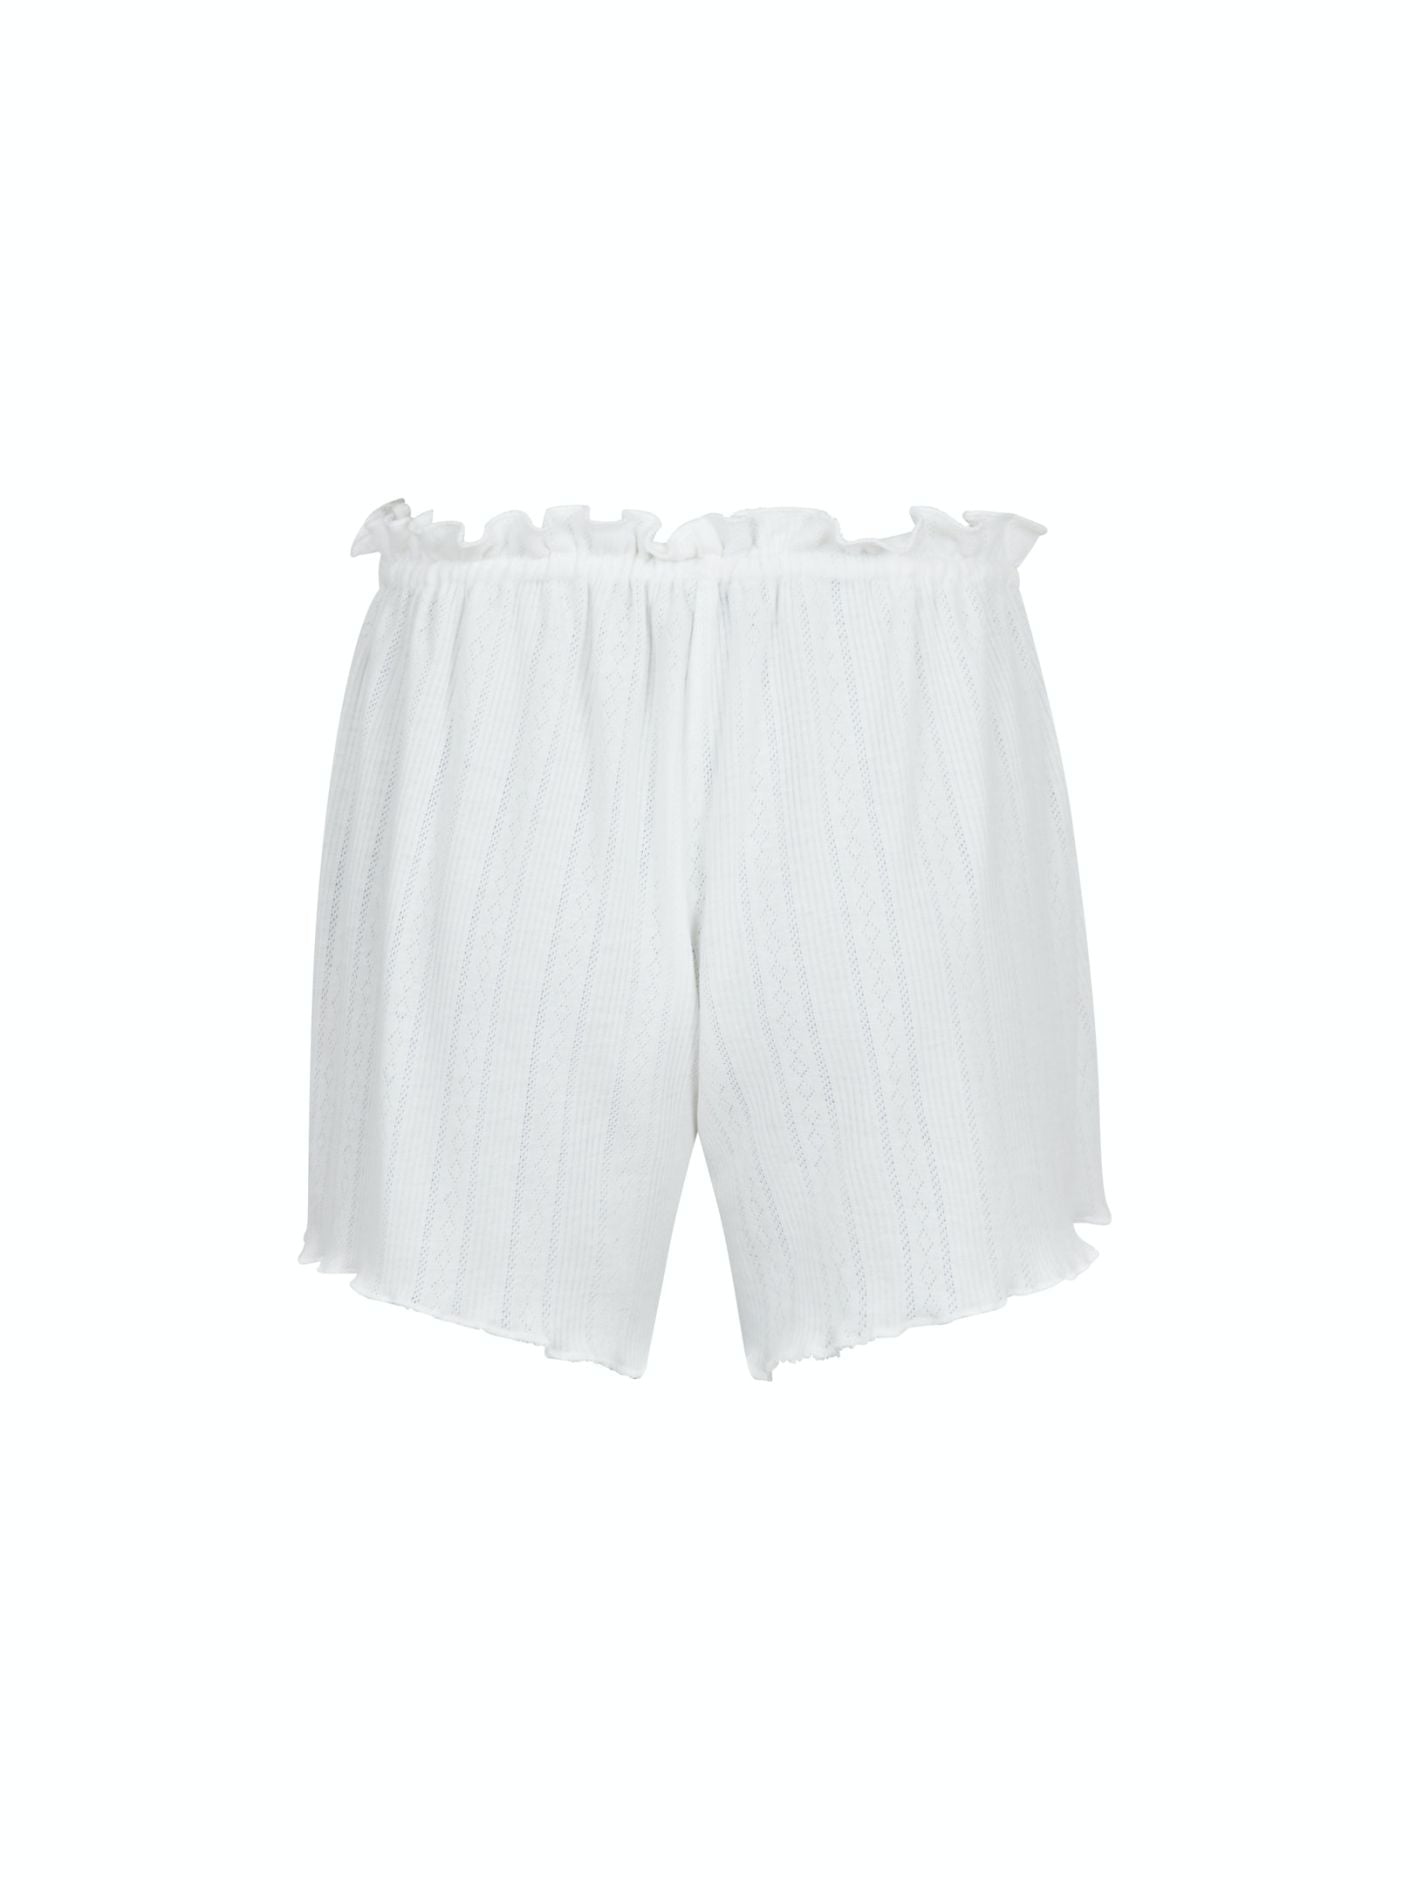 Merritt Pointelle Shorts - Shorts